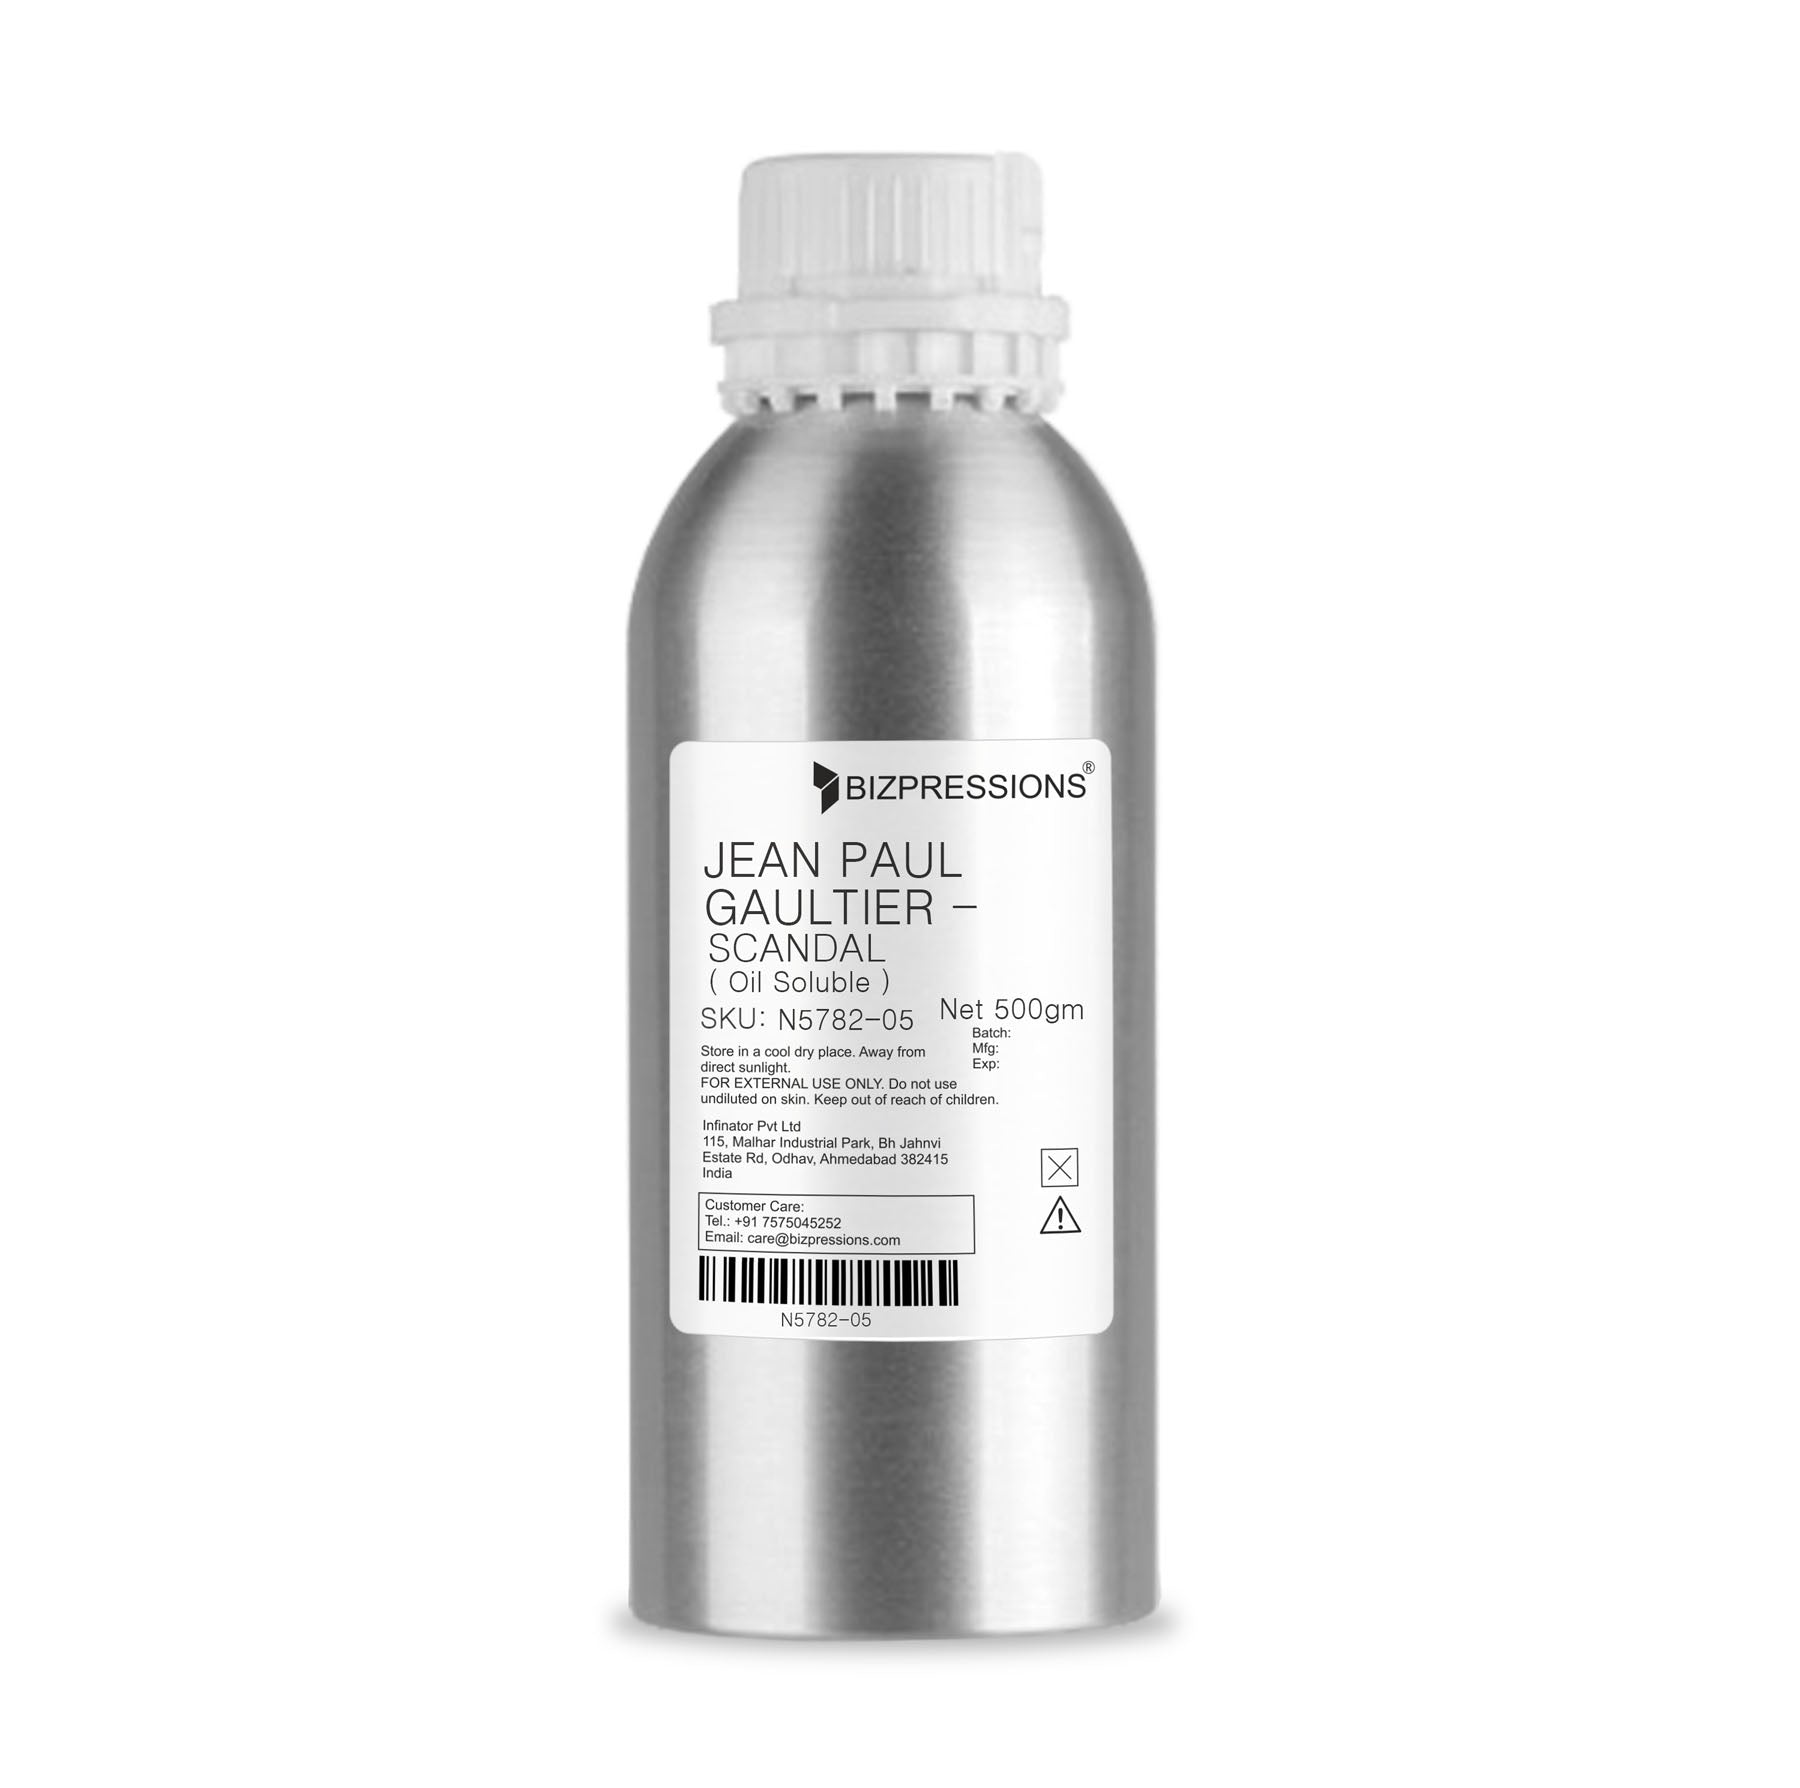 JEAN PAUL GAULTIER - SCANDAL - Fragrance ( Oil Soluble ) - 500 gm